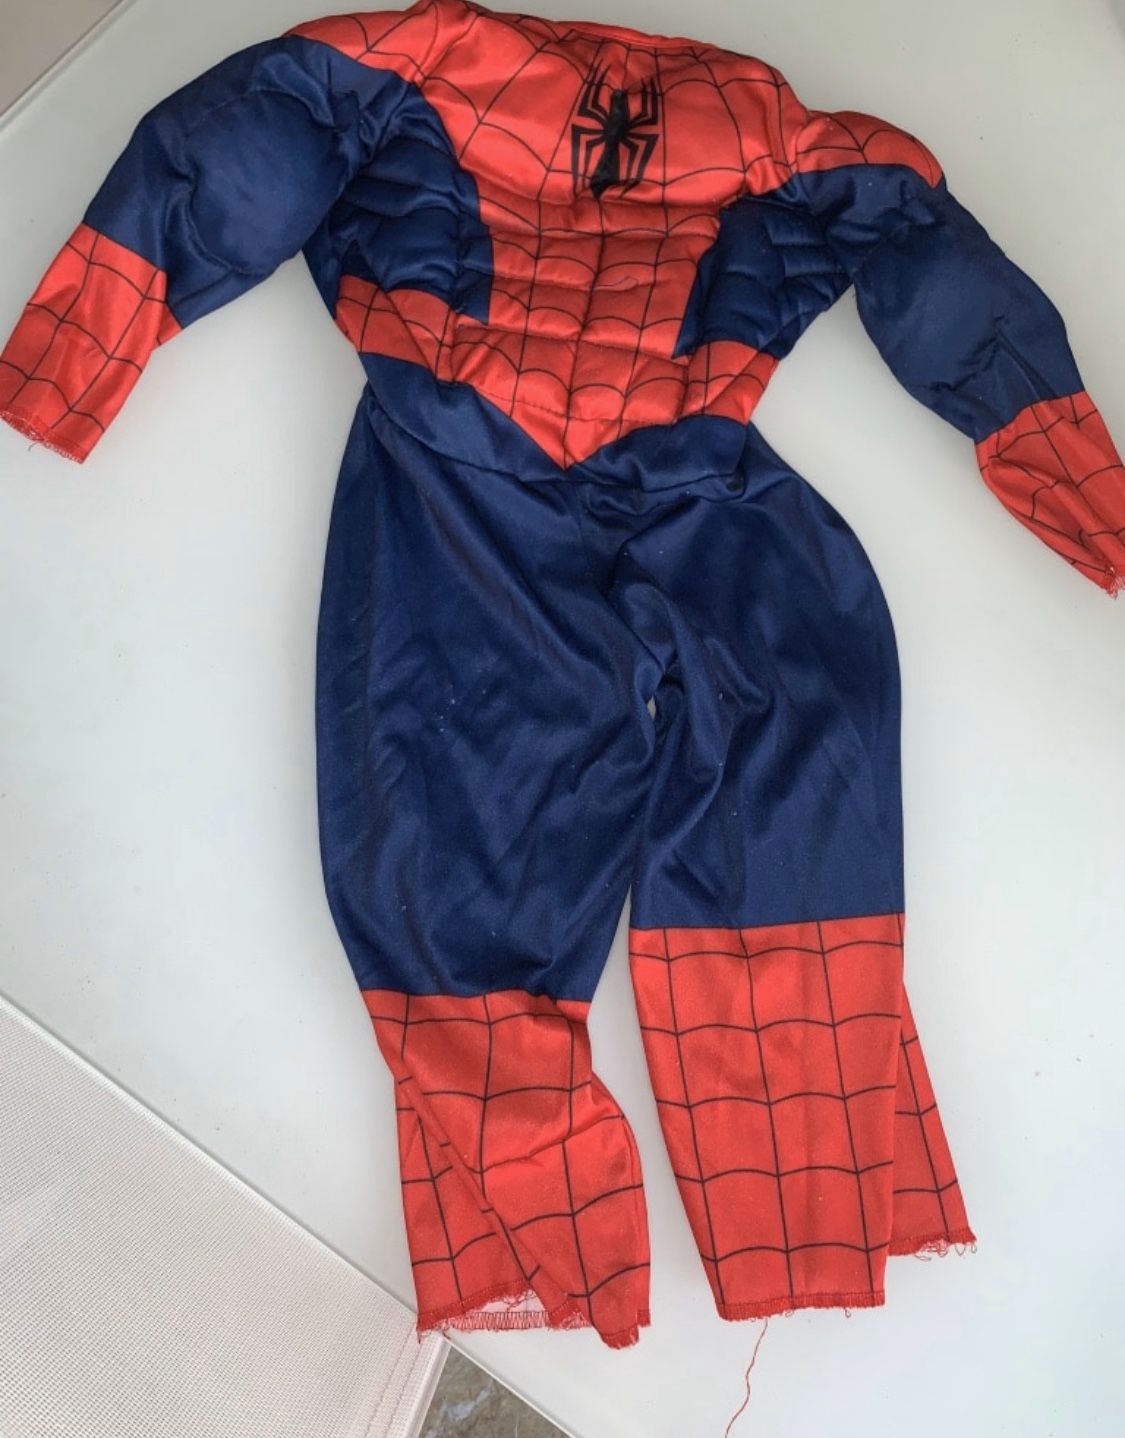 Spider-Man costume size 1-2t